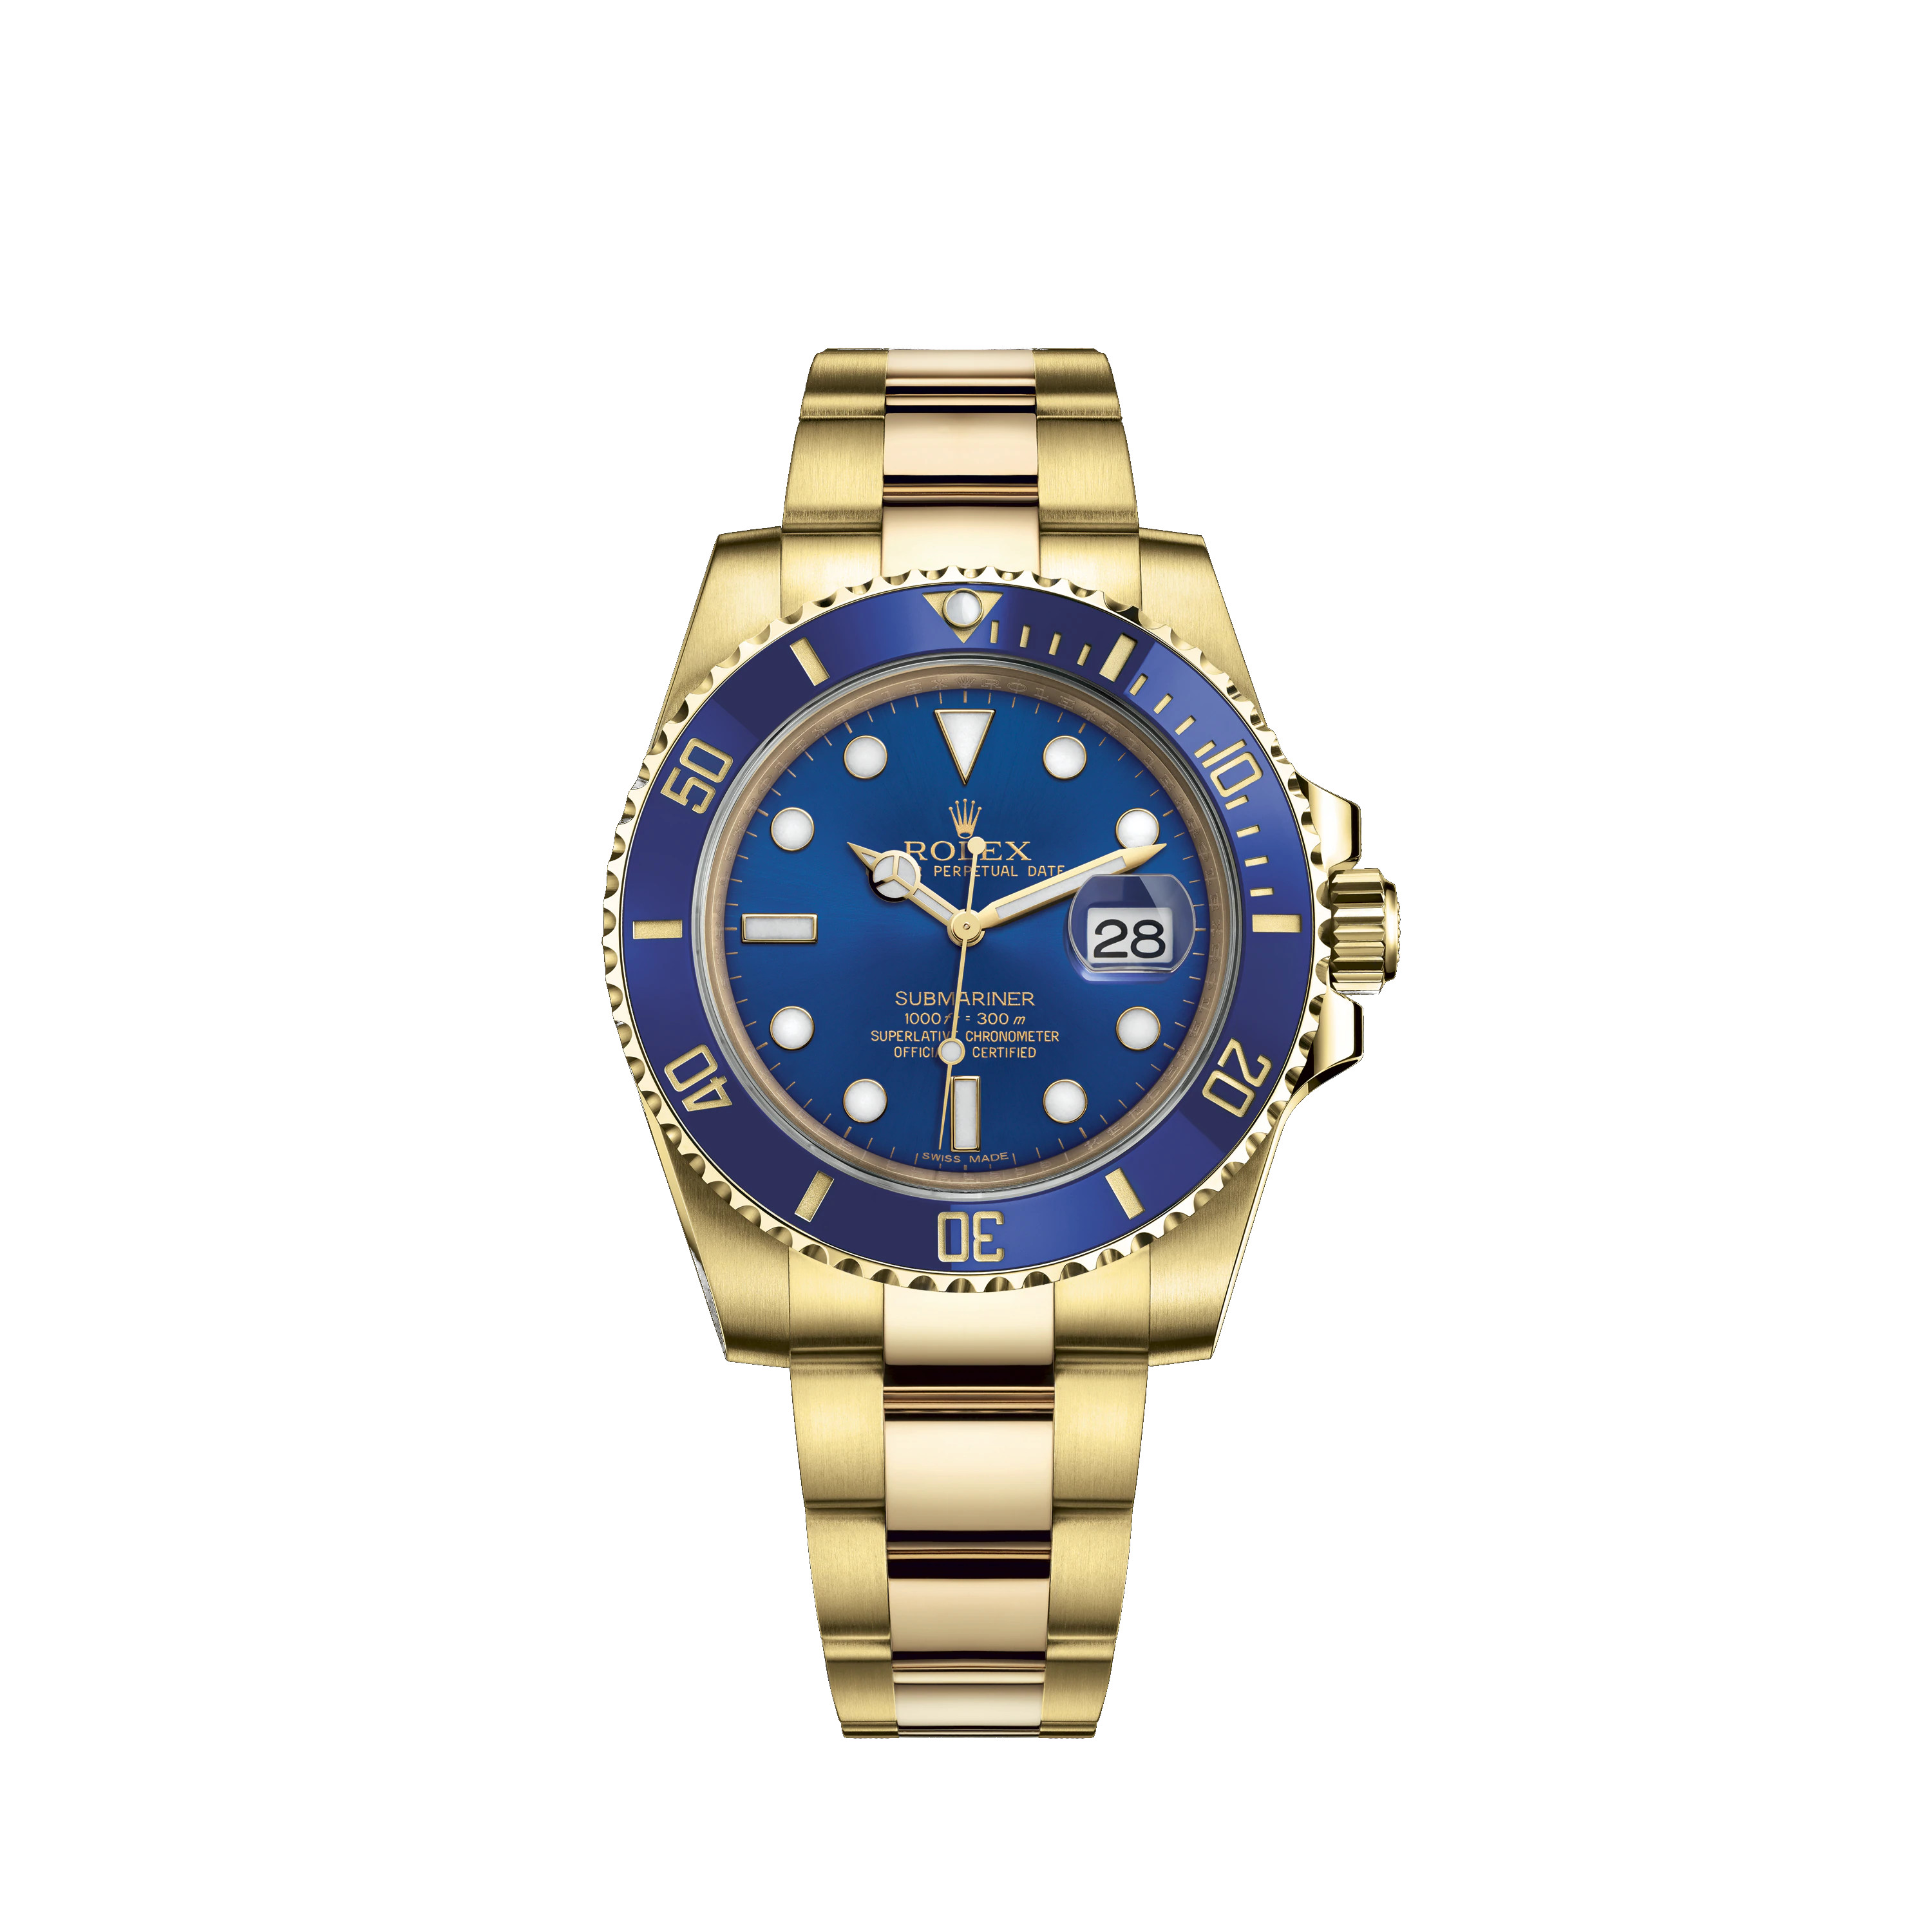 Submariner 116618LB Gold Watch (Blue)